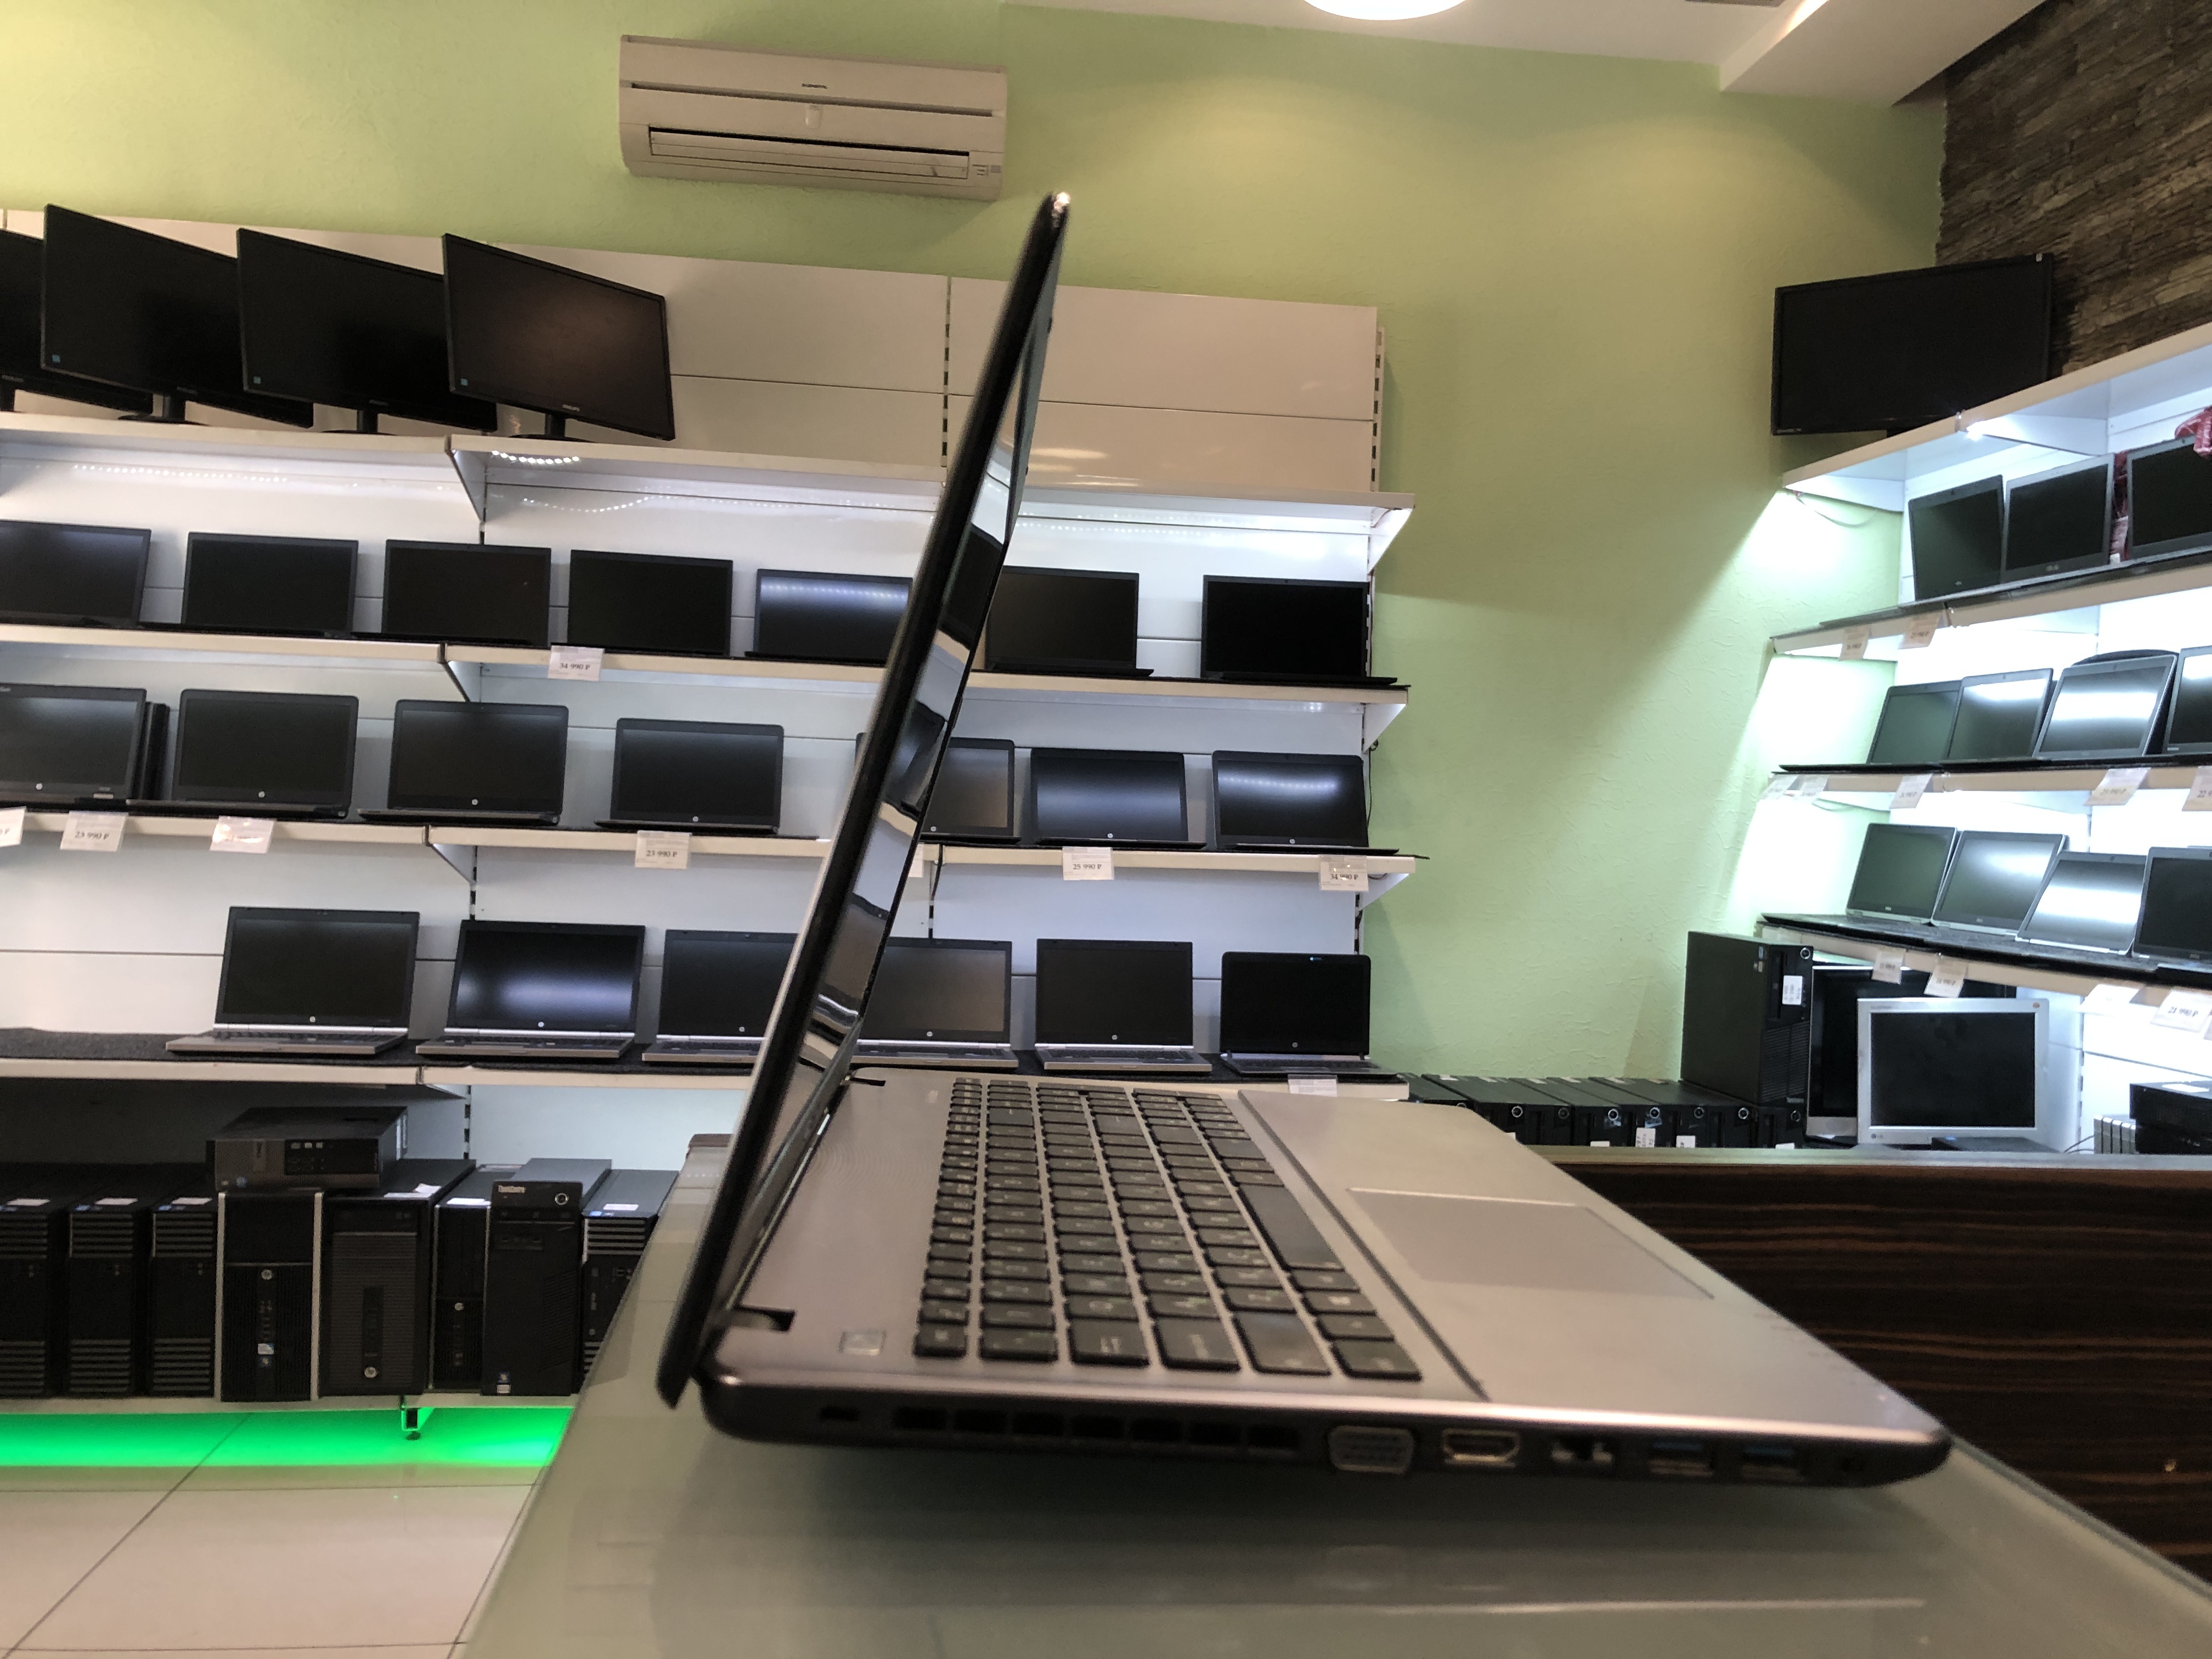 Купить бу ноутбук Asus Acer Lenovo Dell HP Sony Fujitsu Samsung DNS DEXP Toshiba Huawei Apple MacBook в Новосибирске